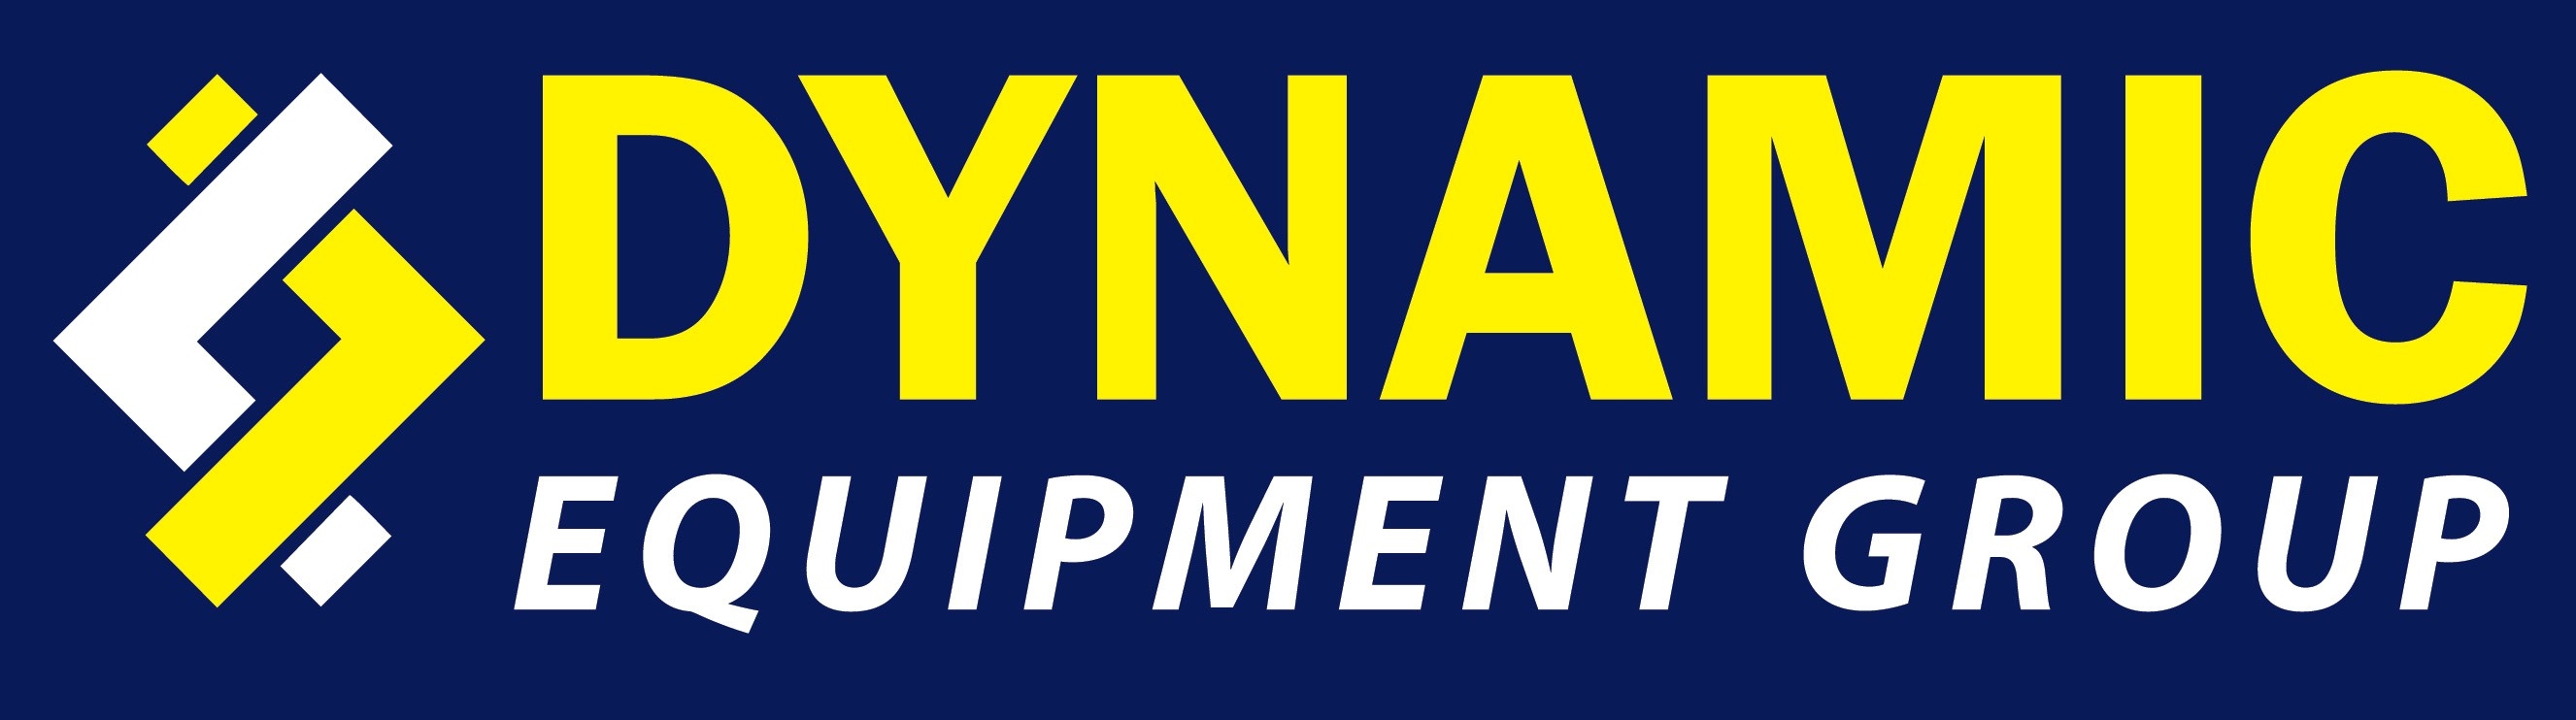 Dynamic Equipment Group company logo